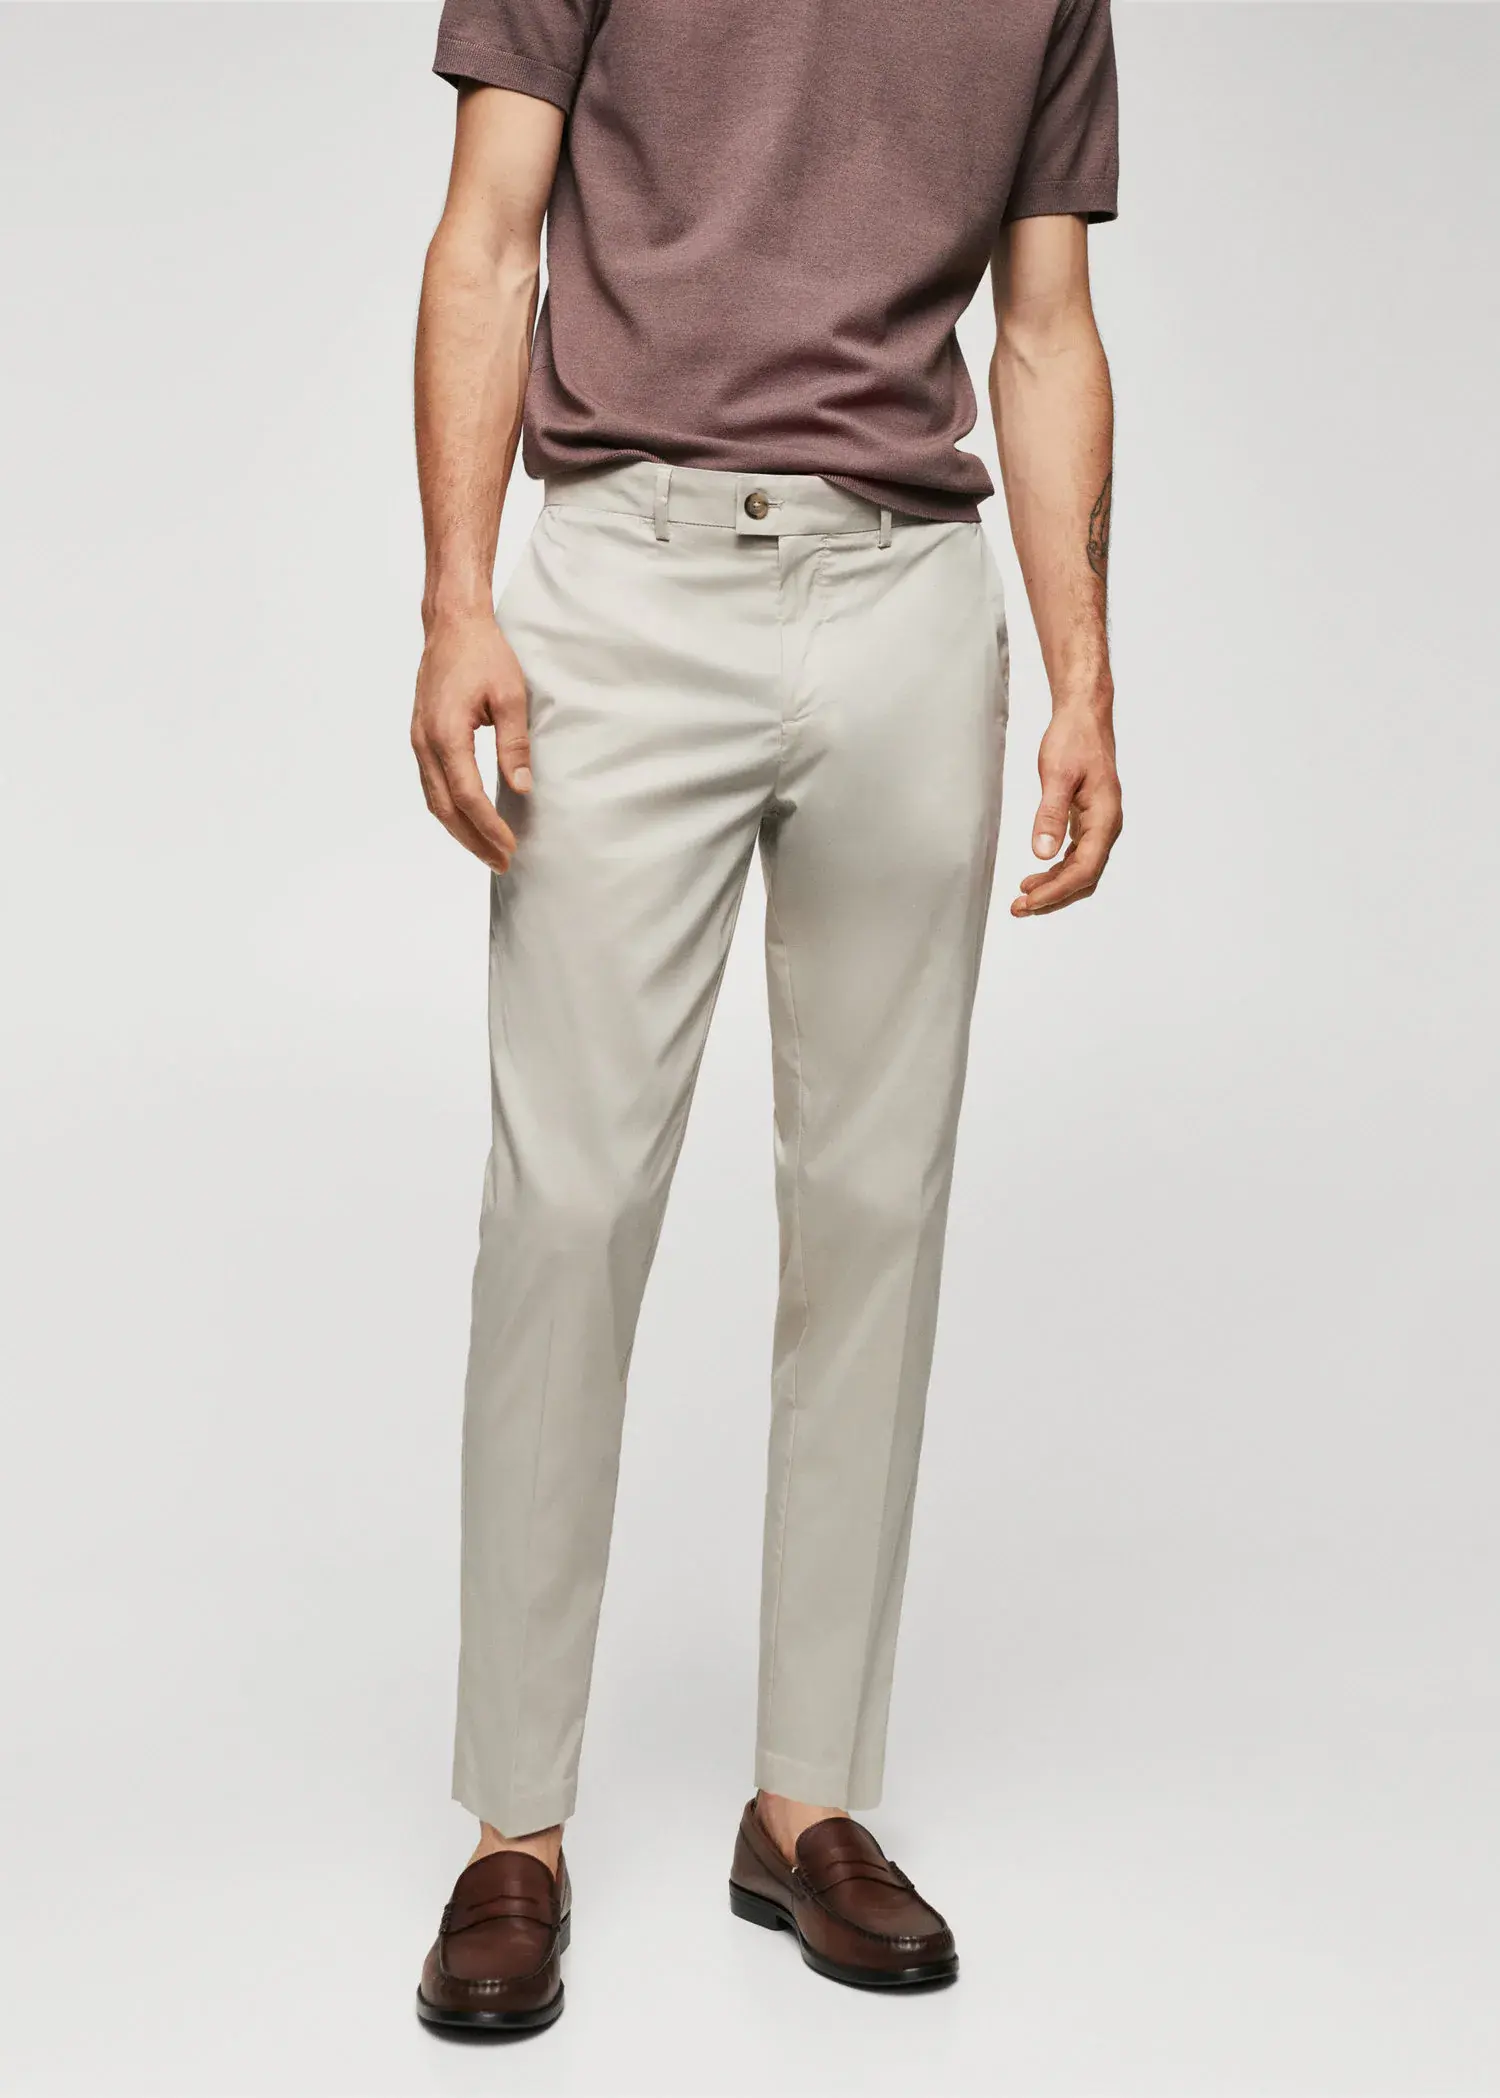 Mango Lightweight cotton pants. a man wearing a tan shirt and a pair of white pants. 